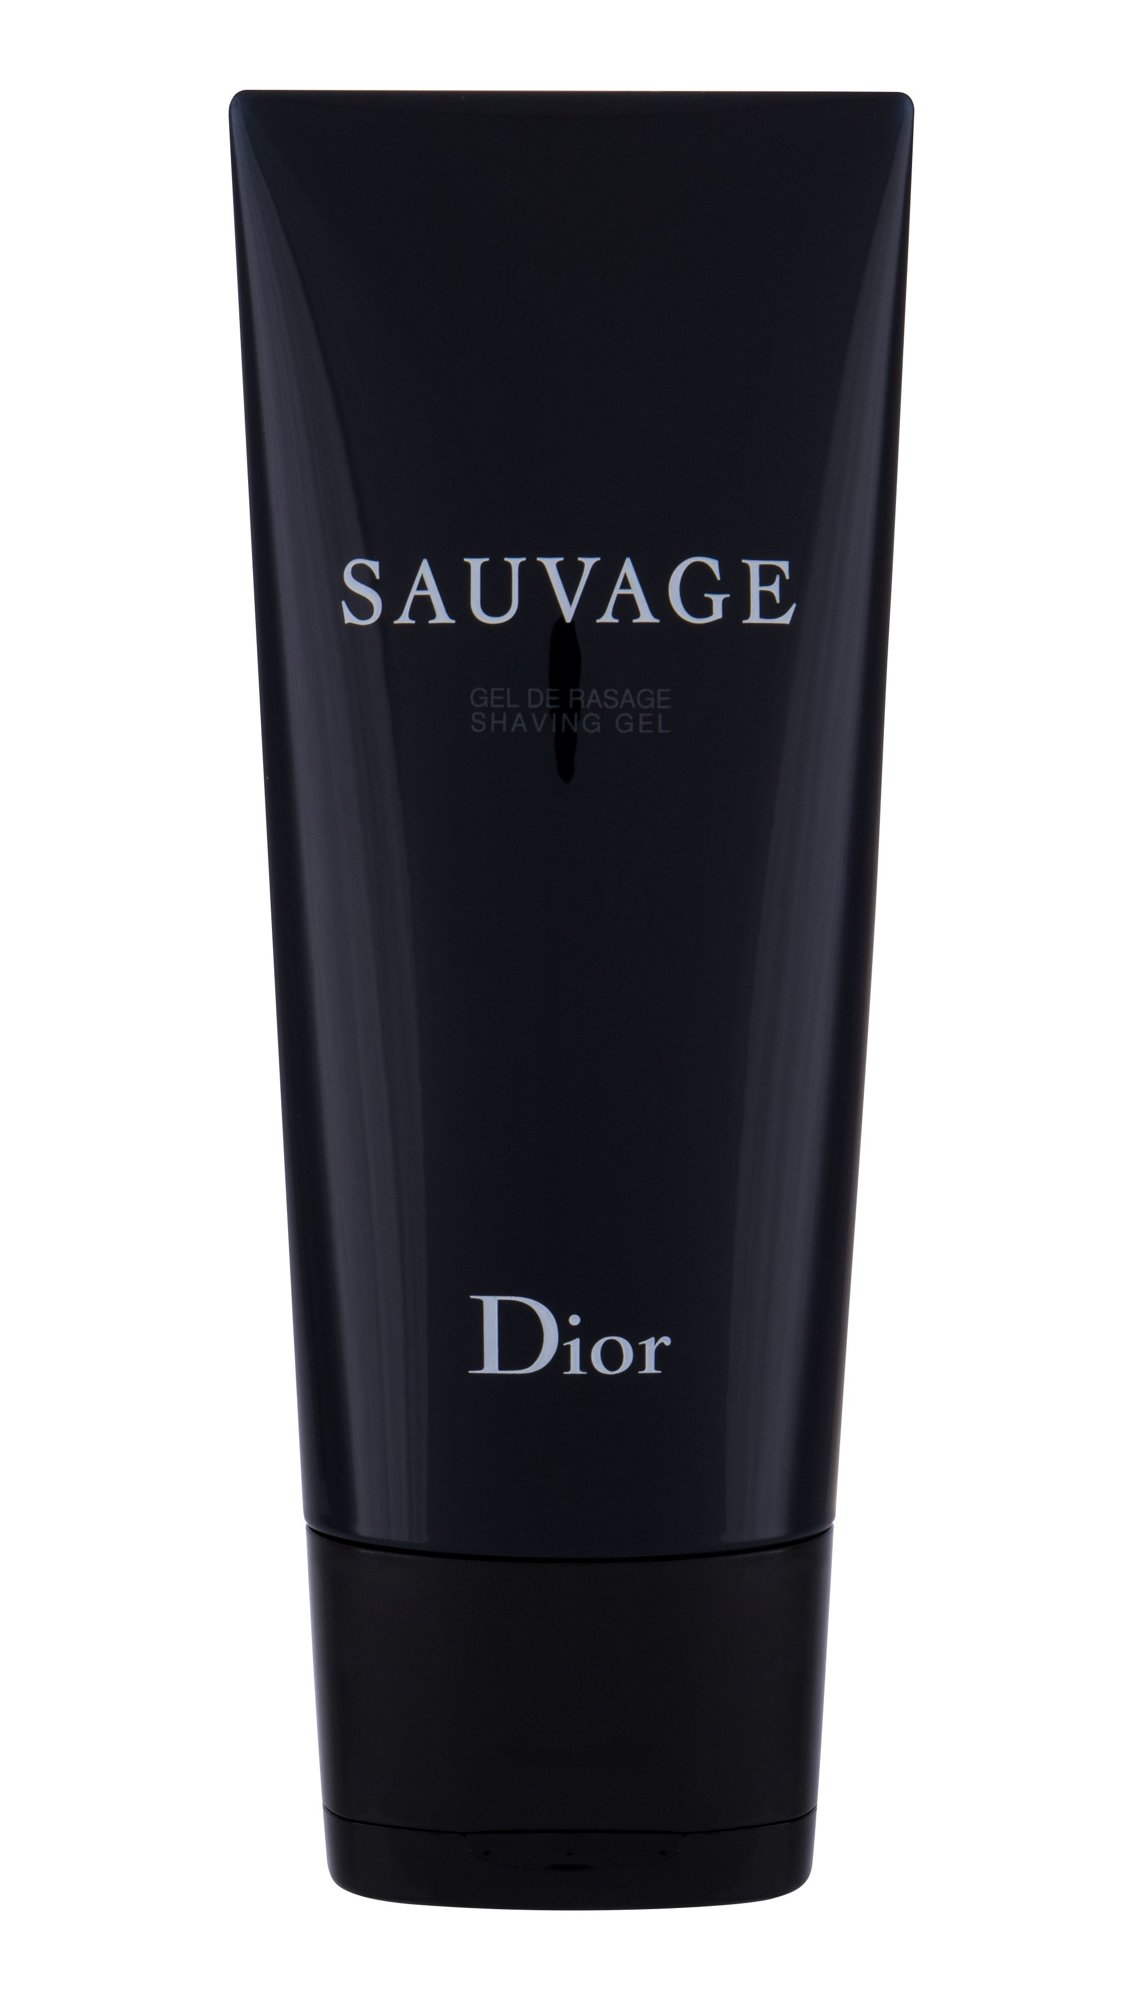 Christian Dior Sauvage 125ml skutimosi gelis